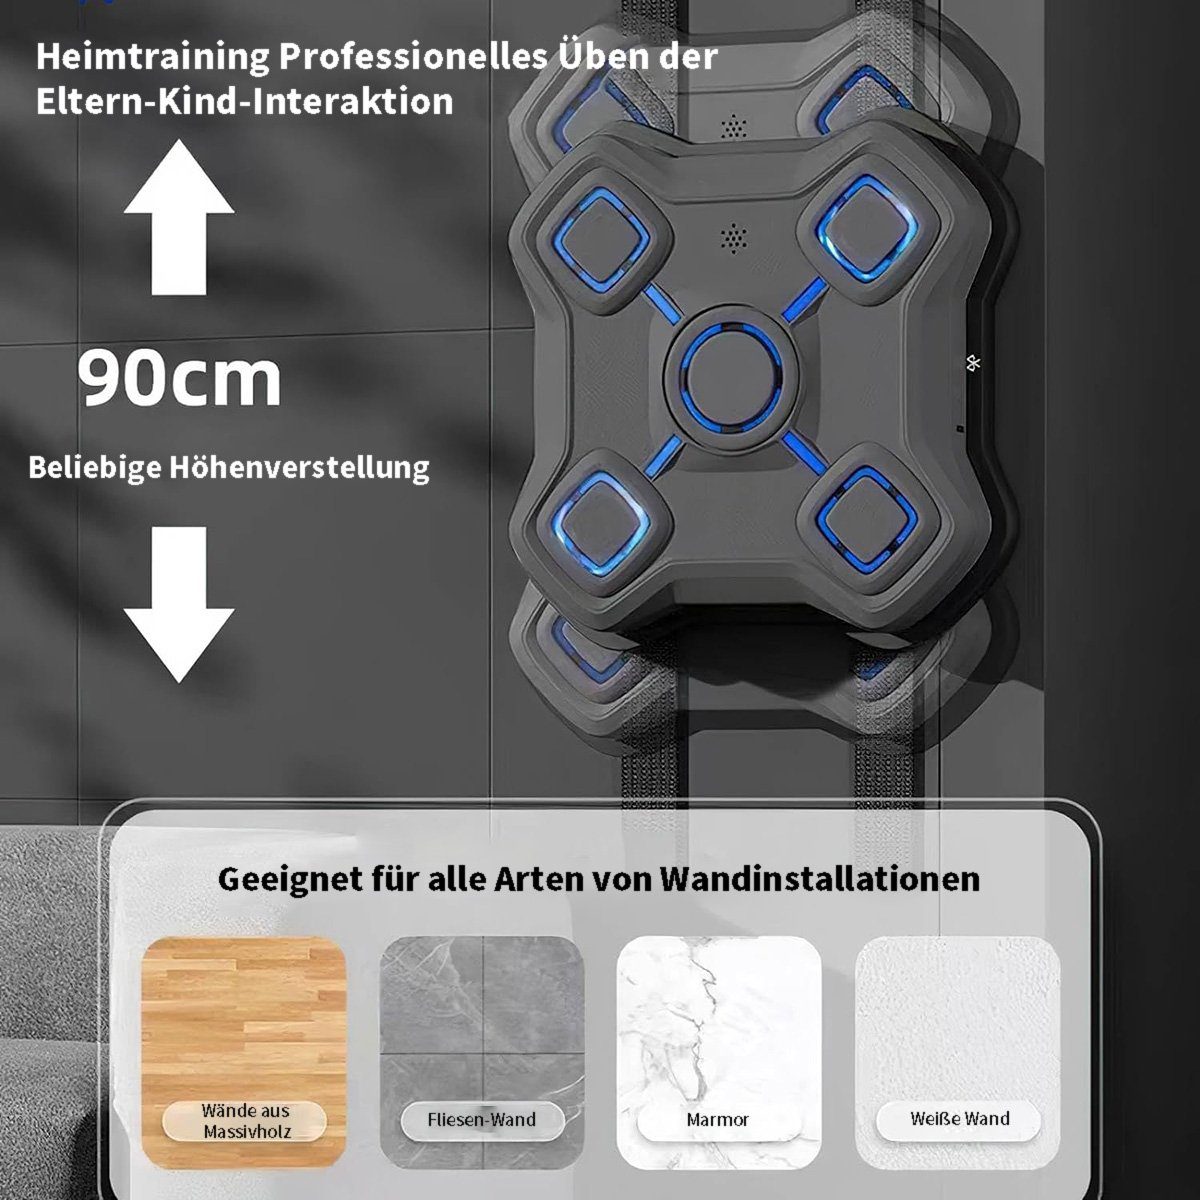 götäzer Sportanzug Wandmontierte elektronische für und Bluetooth-Boxgerät Musik-Box-Trainingsmaschine, Heimtraining Stressabbau